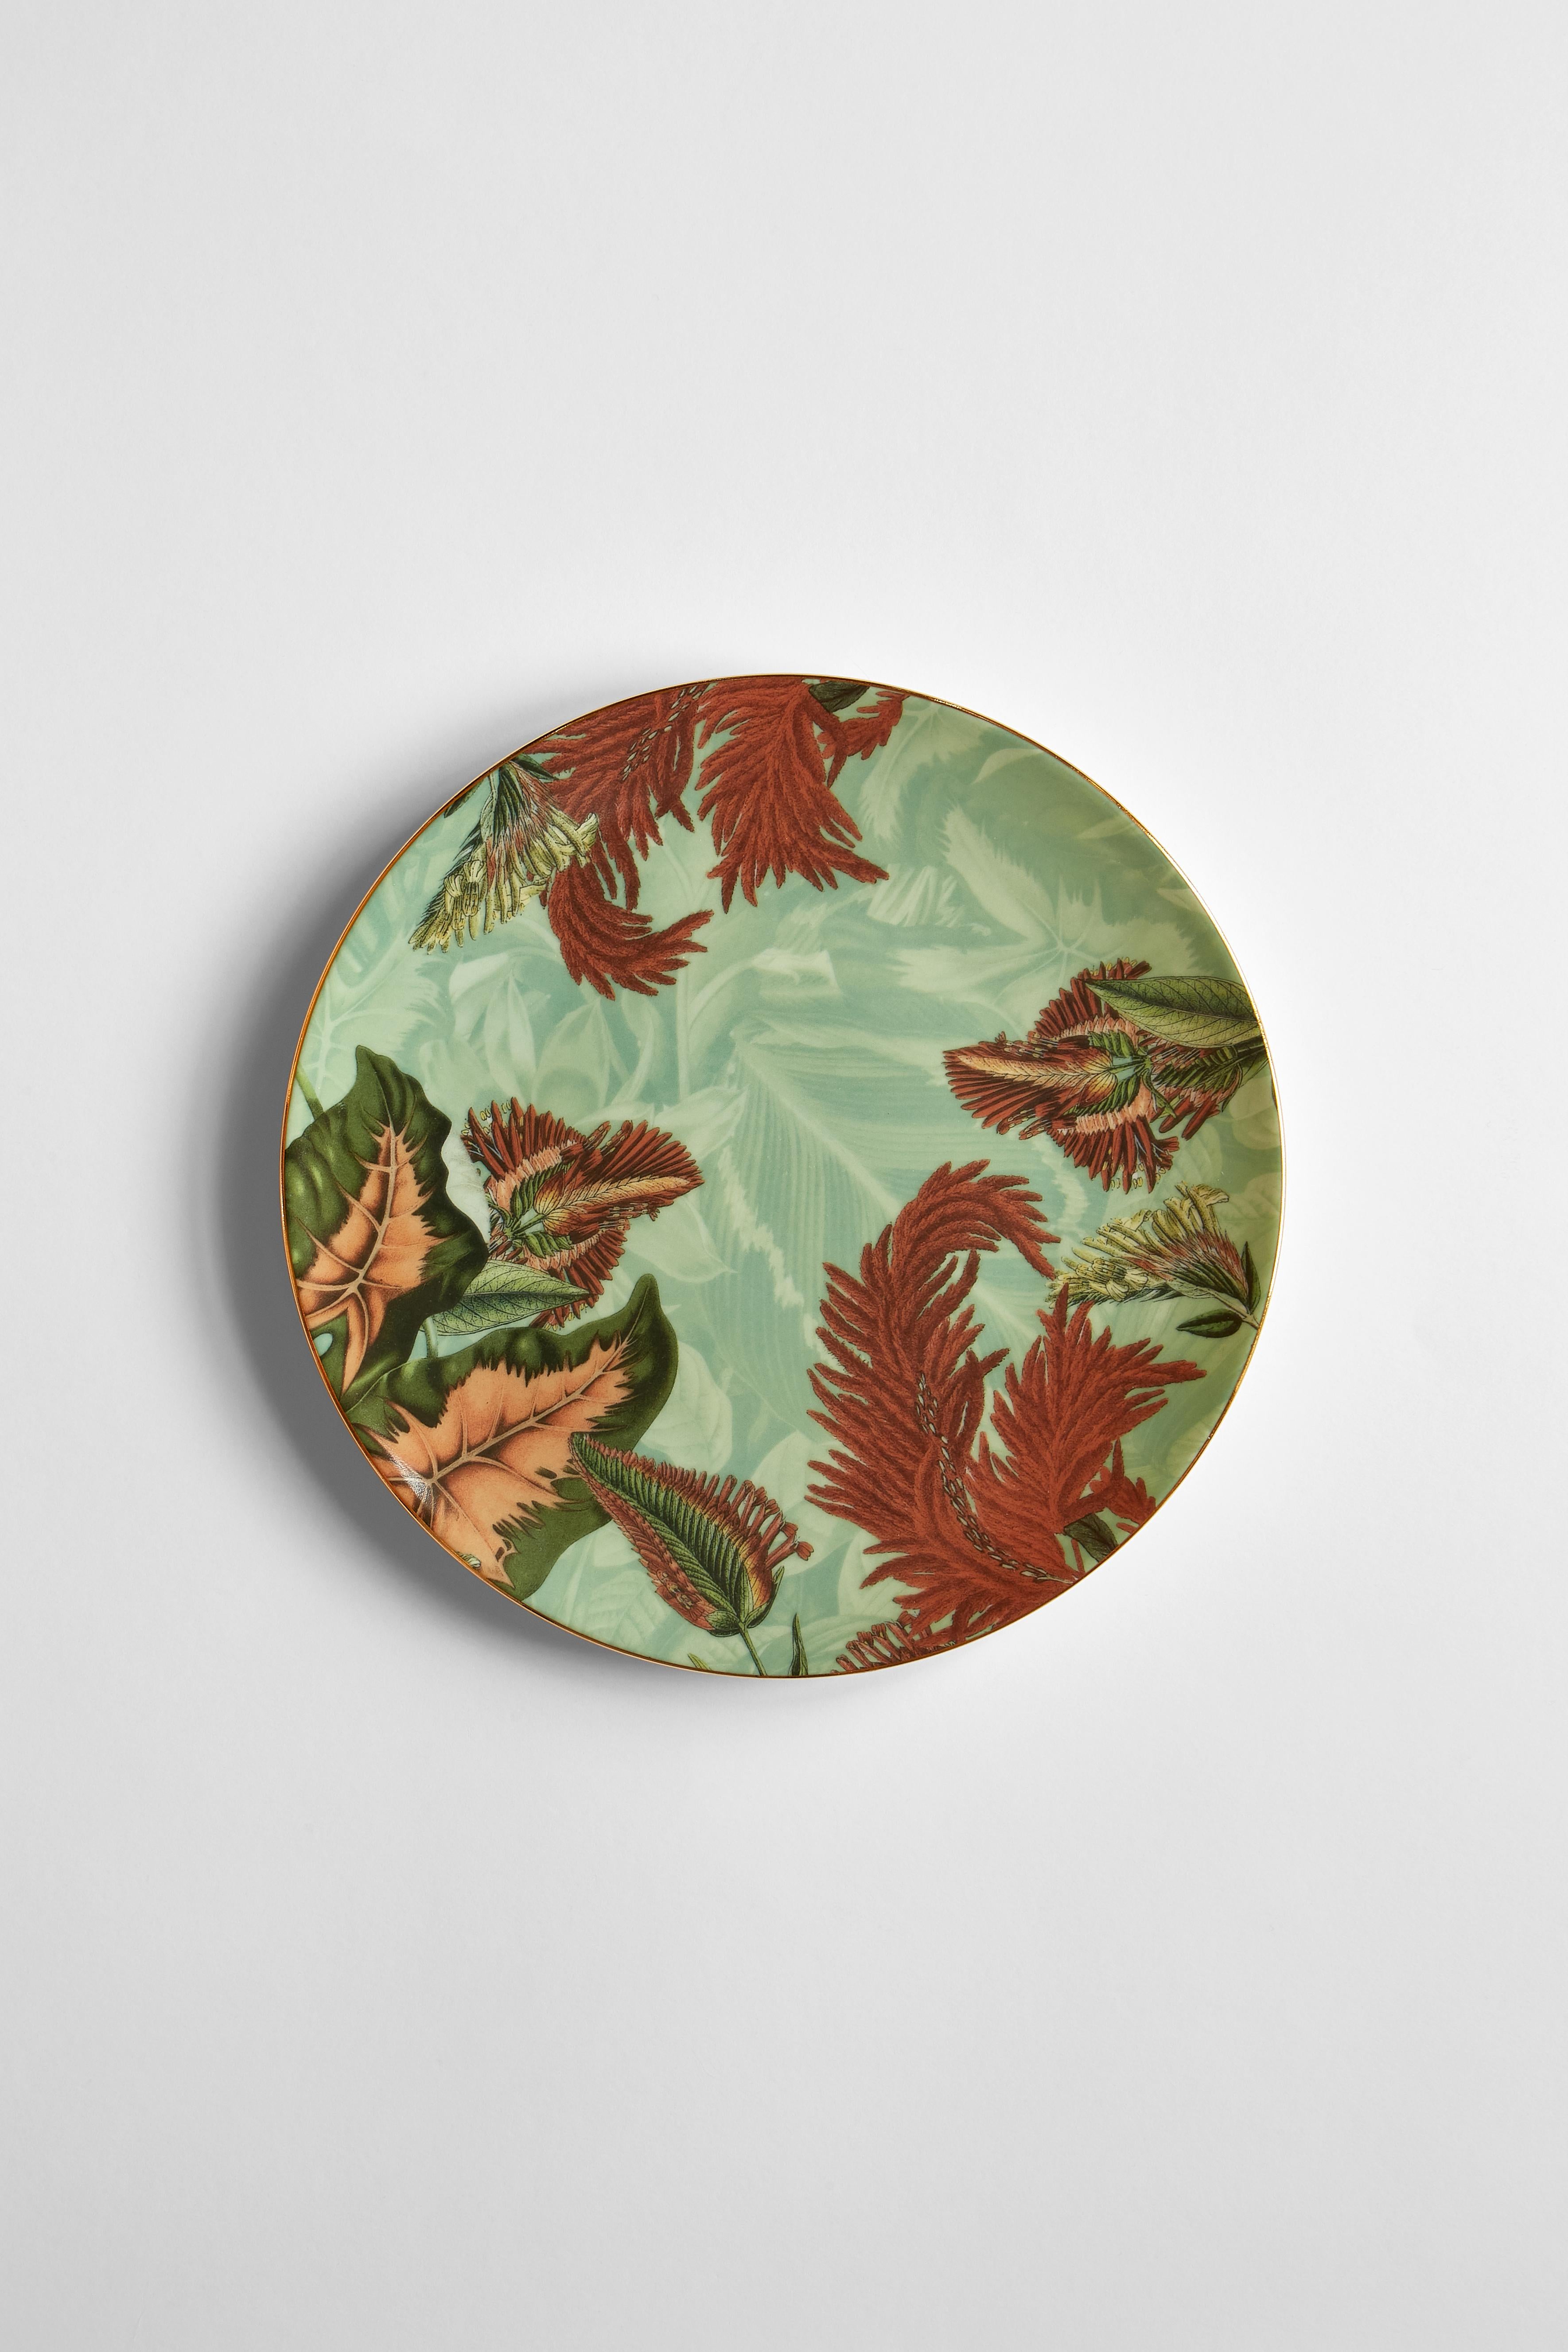 Animalia, Six Contemporary Porcelain Dessert Plates with Decorative Design For Sale 3